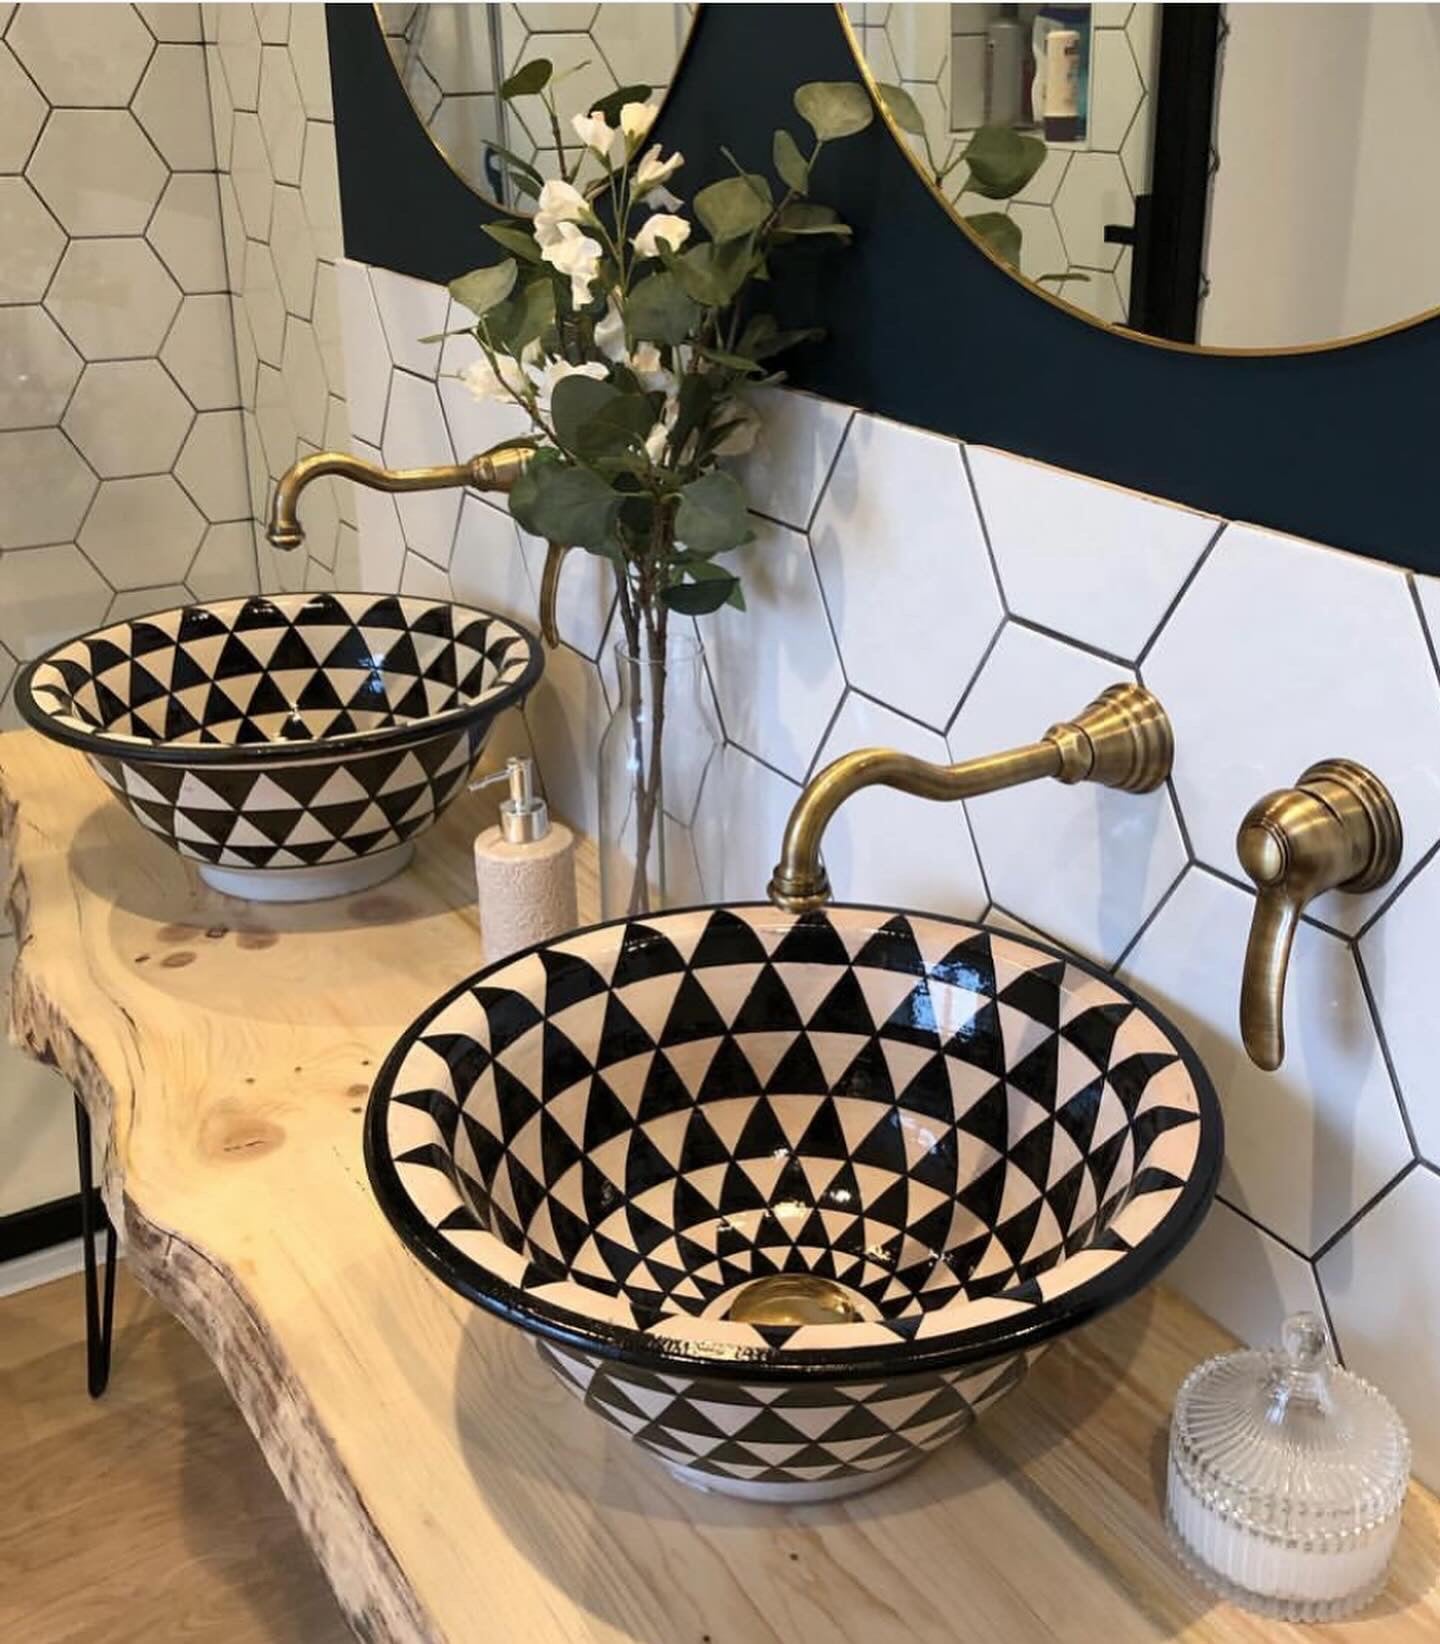 Vasque Marocaine en céramique pour salle de bain - Vasque salle de bain | Lavabo en céramique pour salle de bain | Moroccan sink bowl #37